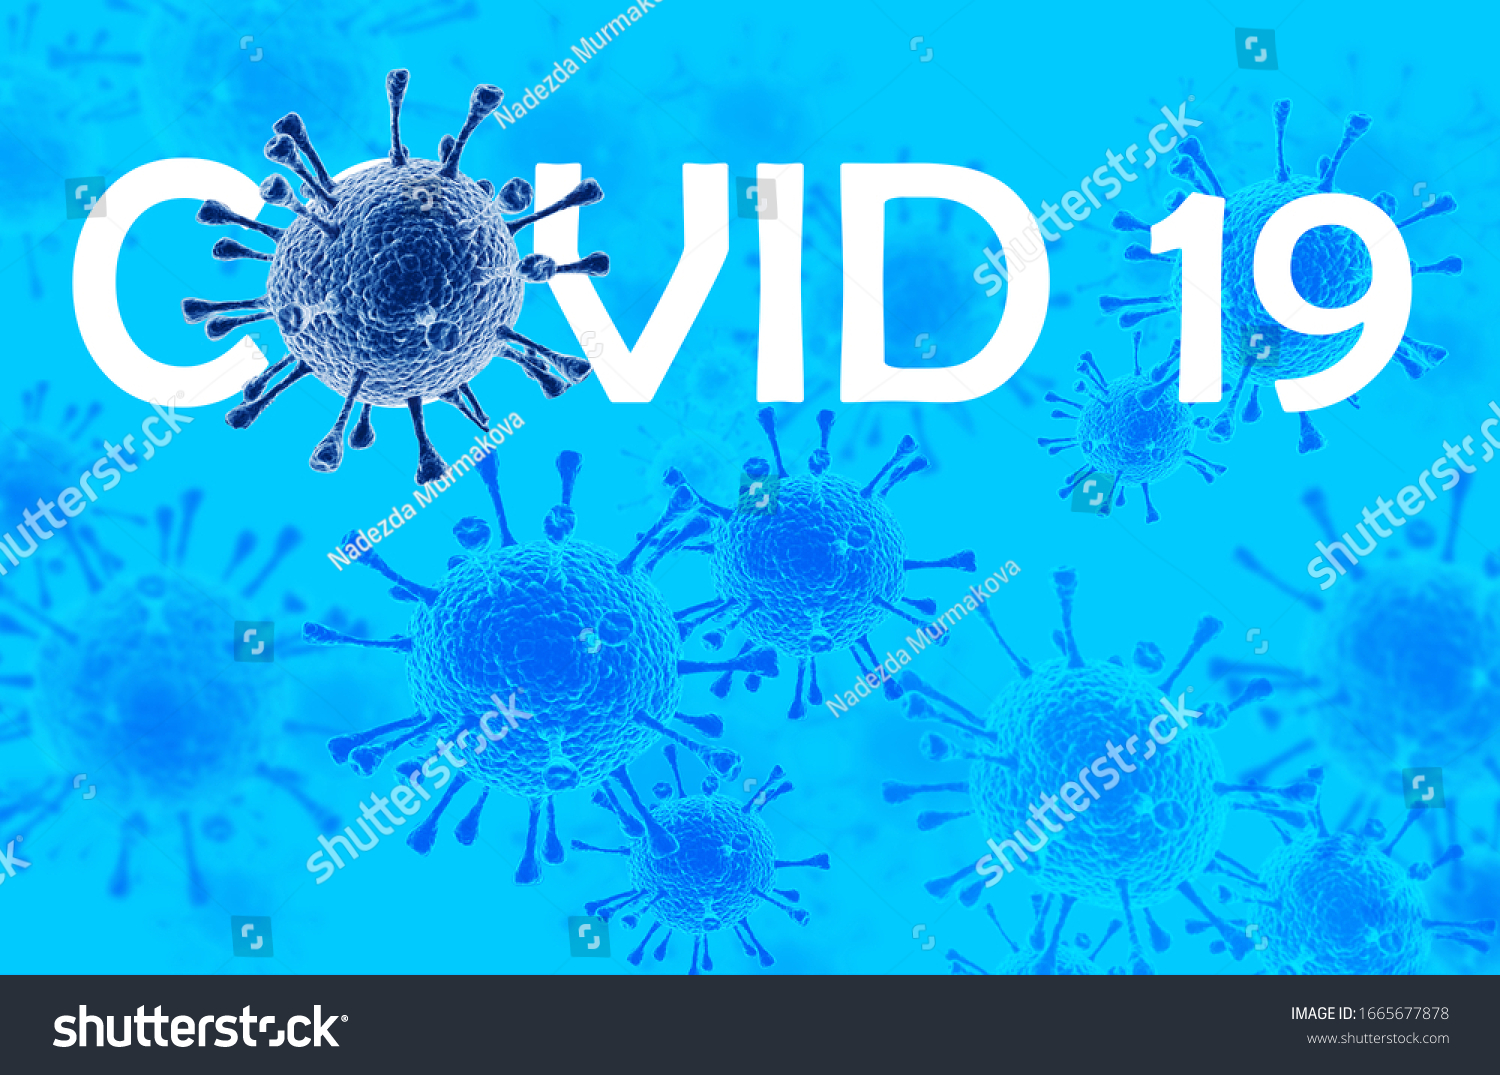 Coronavirus disease COVID-19 infection, medical illustration. New official name for Coronavirus disease named COVID-19, pandemic risk, blue background #1665677878